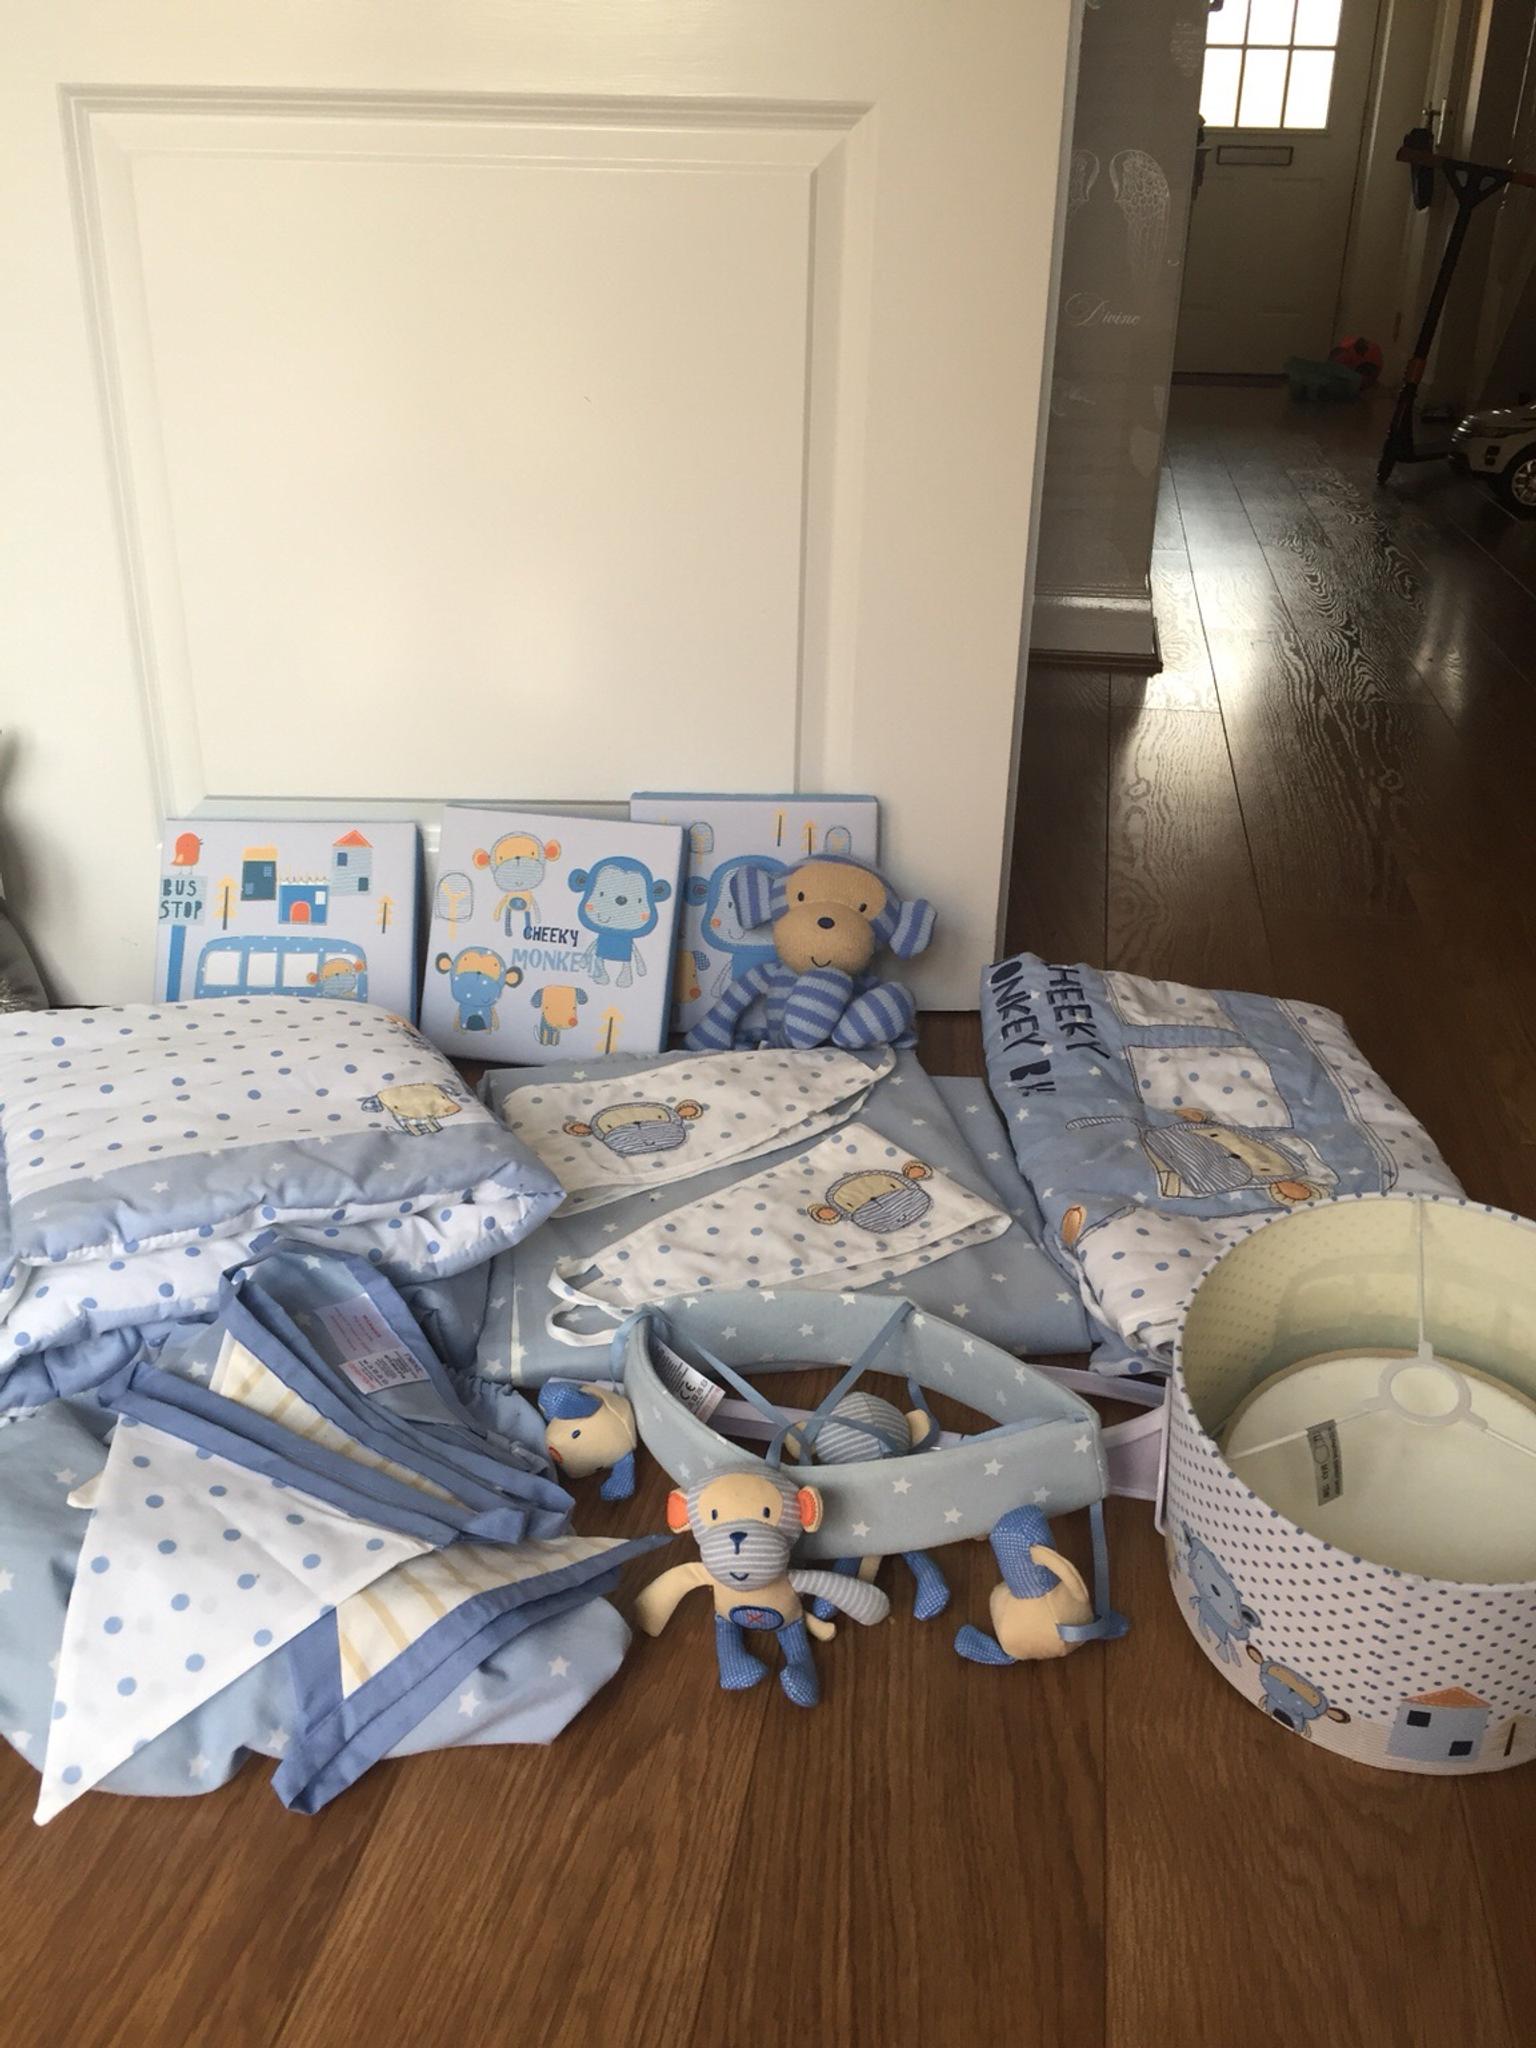 next baby nursery bedding sets